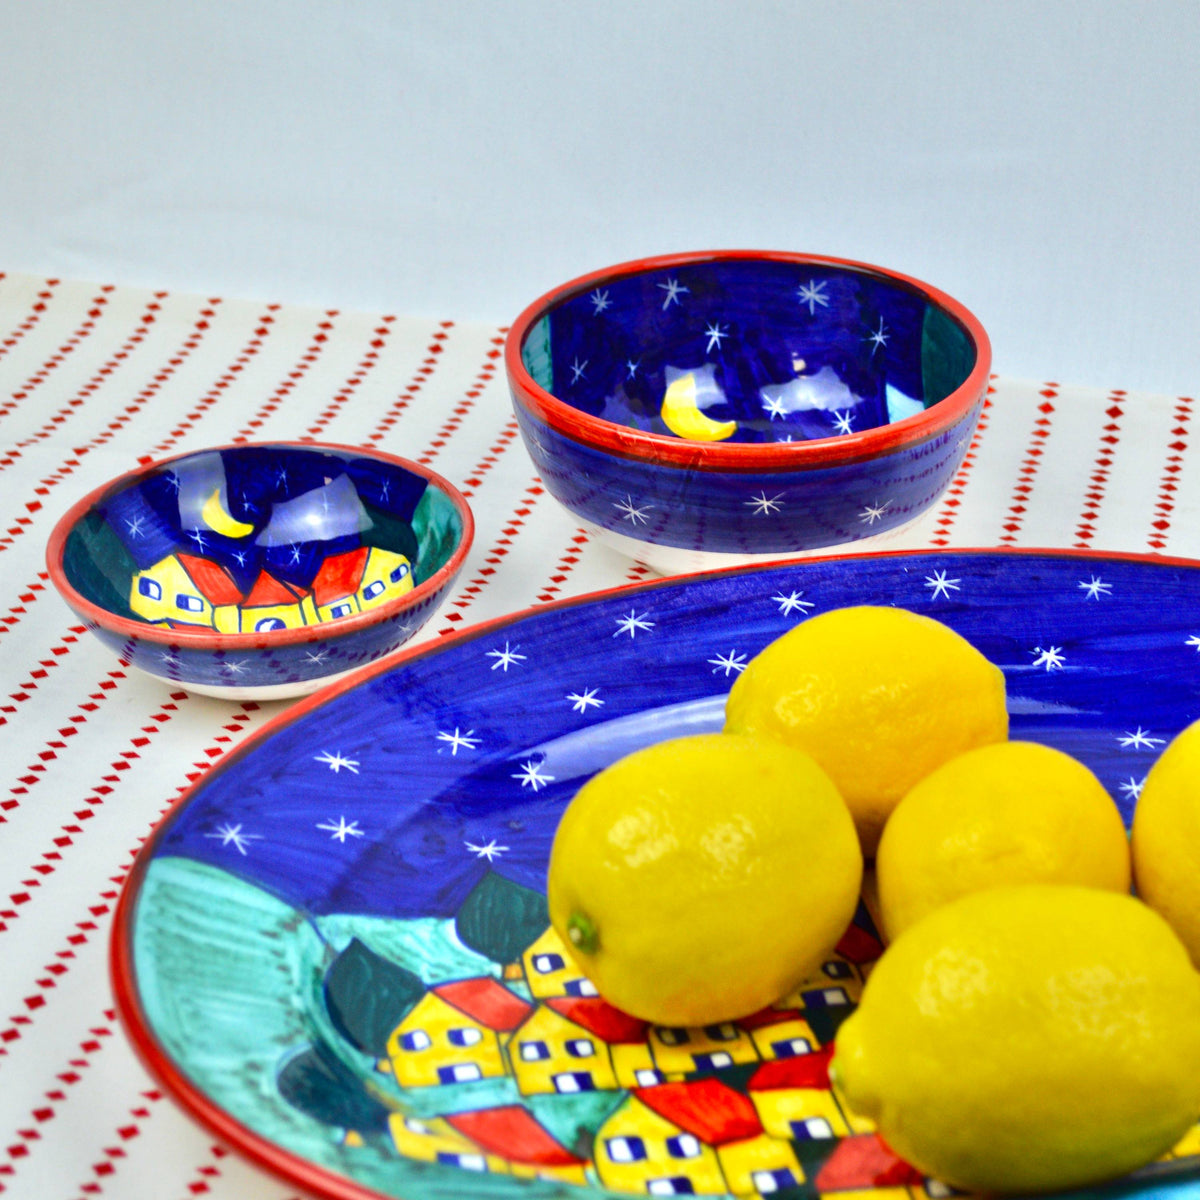 Notte Italian Ceramics, Platters &amp; Bowls, Made In Deruta, Italy - My Italian Decor